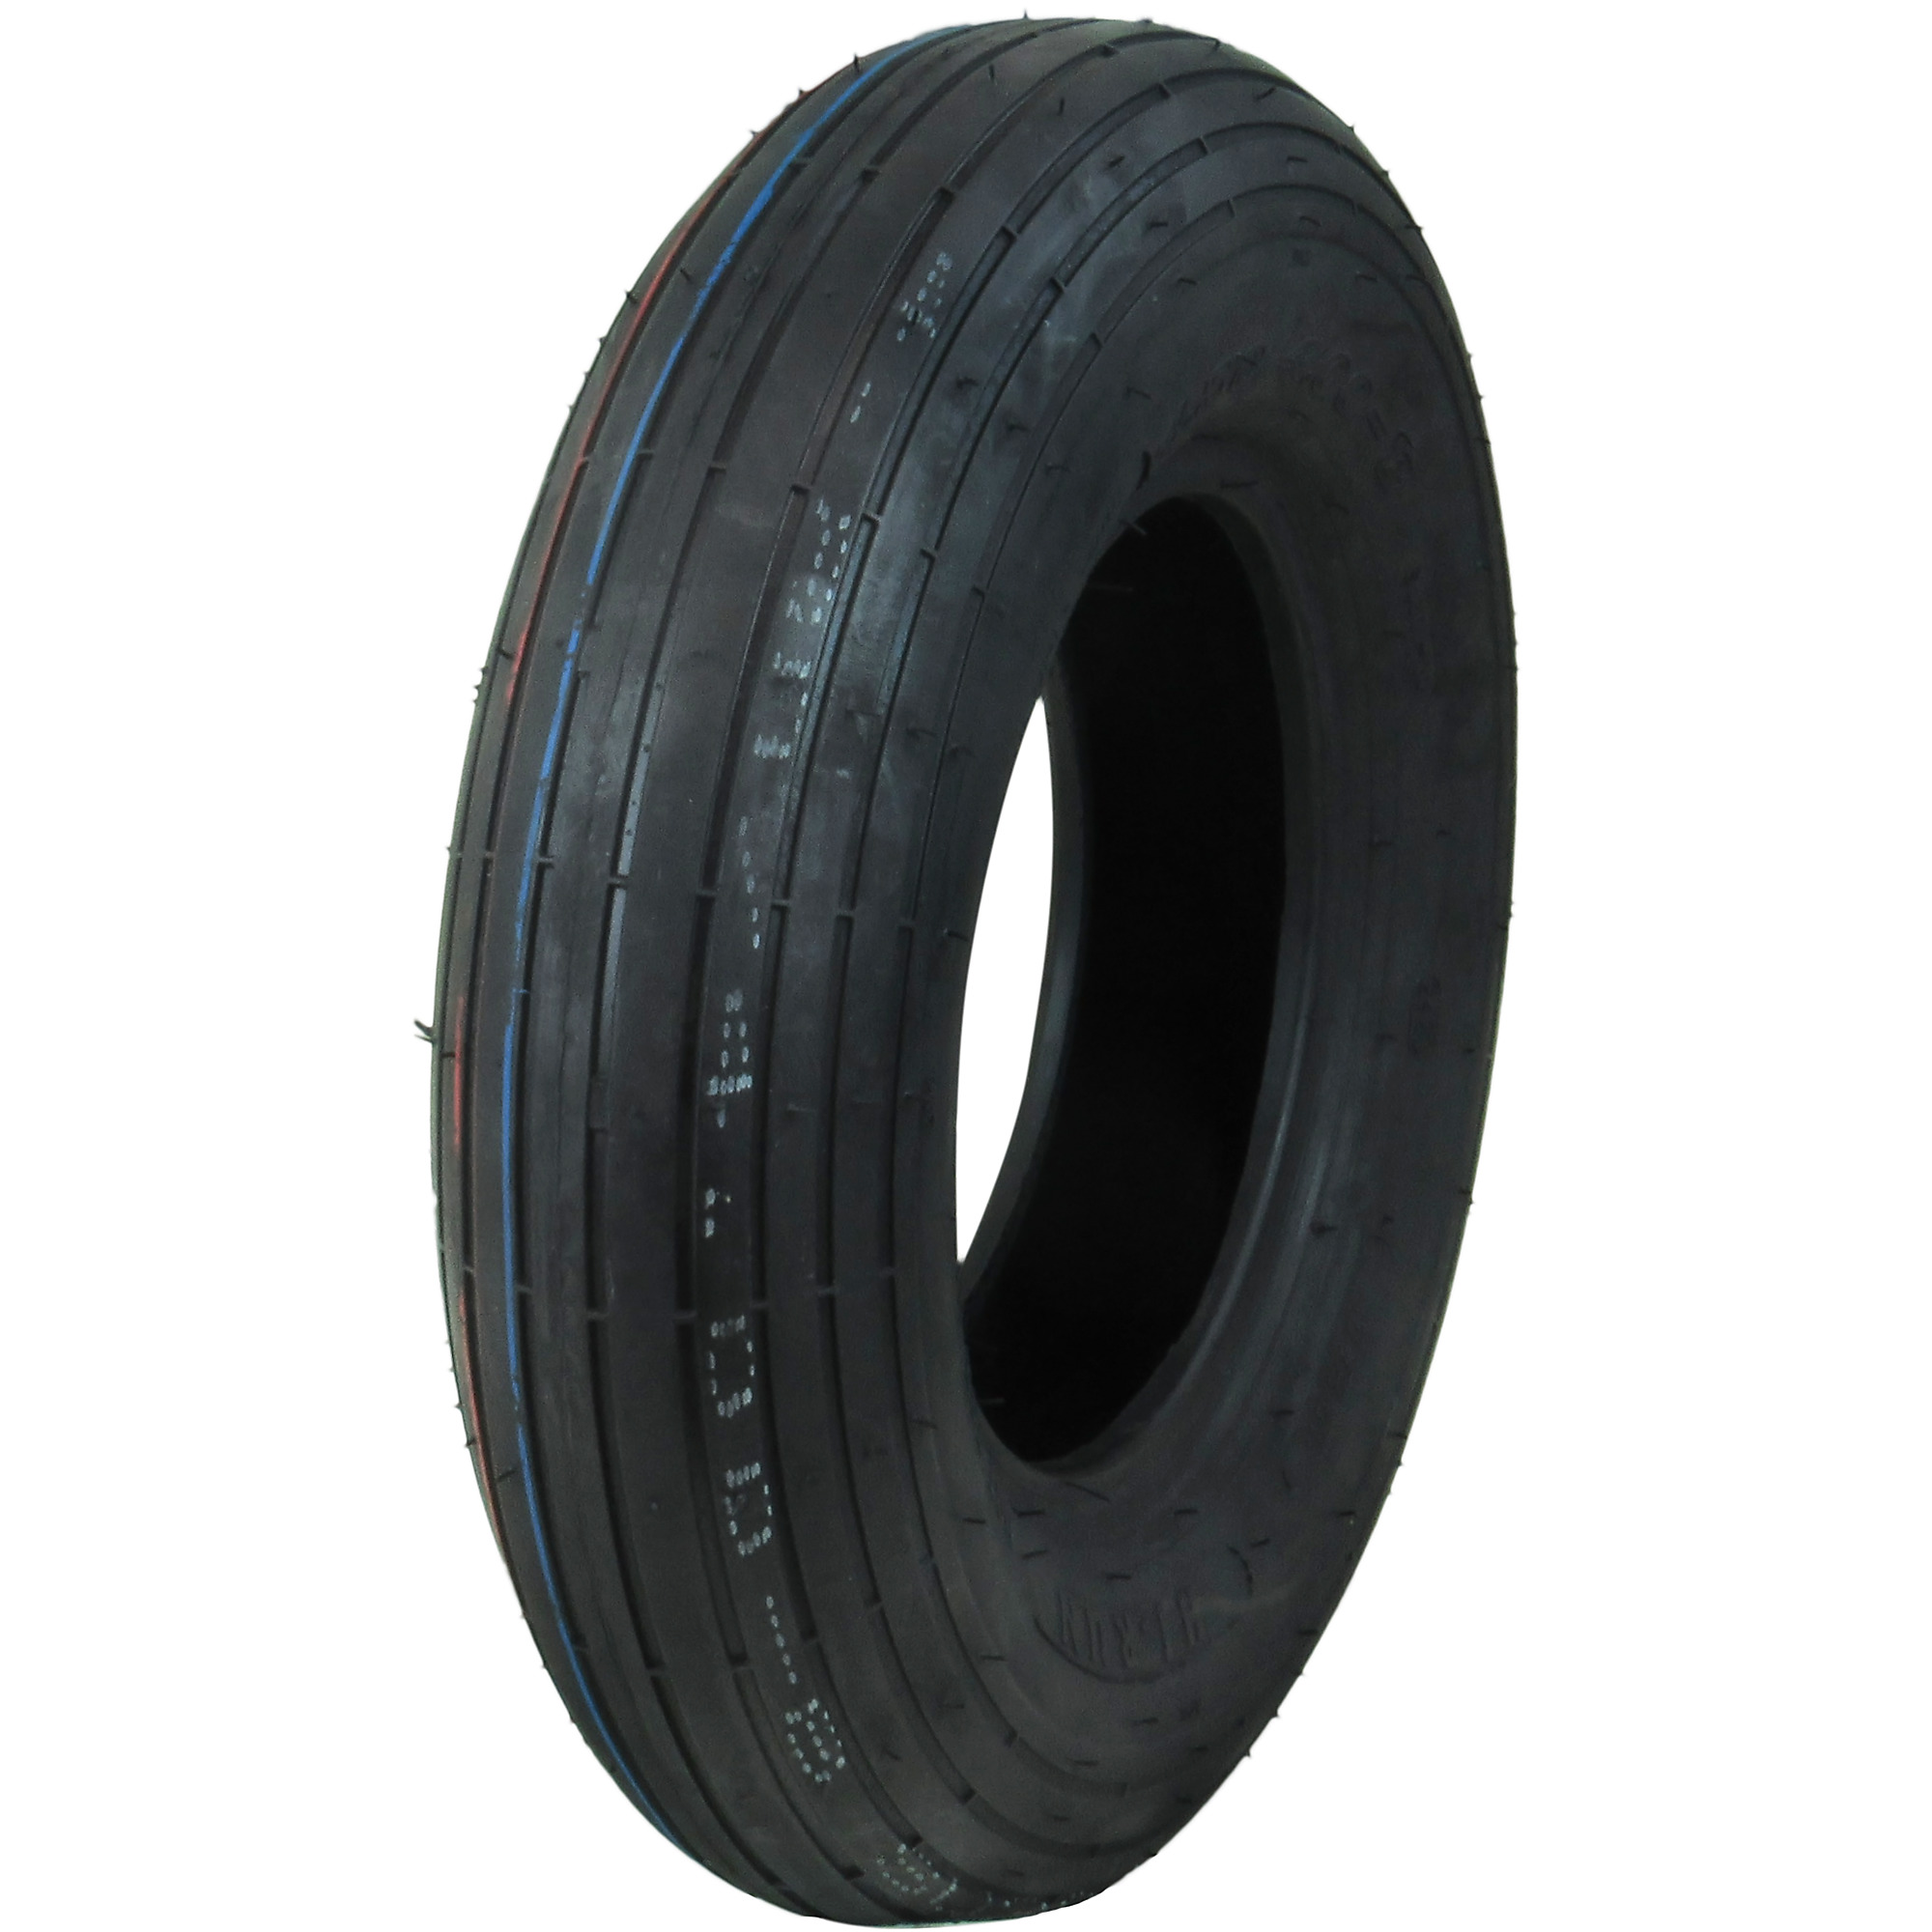 HI-RUN, Lawn Garden Tire, SU31 Rib, Tire Size 4.80/4.00-8 Load Range Rating B, Model WD1086